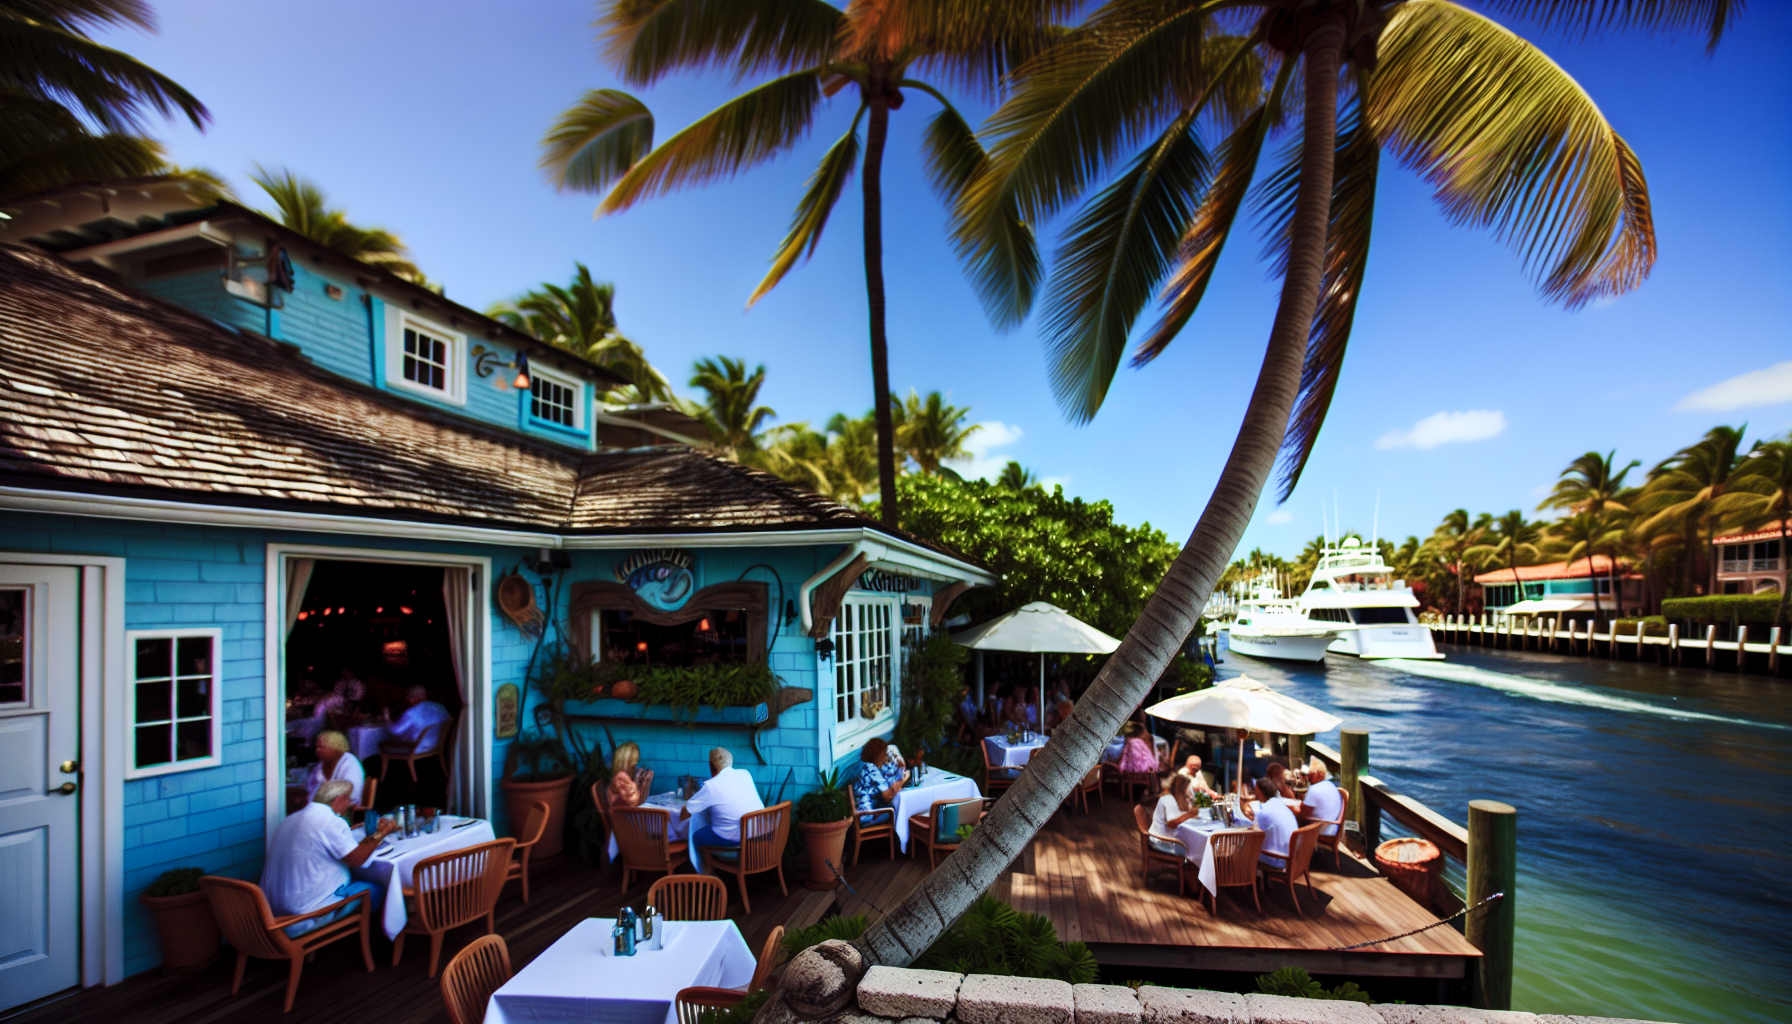 Coconuts restaurant located by Fort Lauderdale's intercoastal waterways